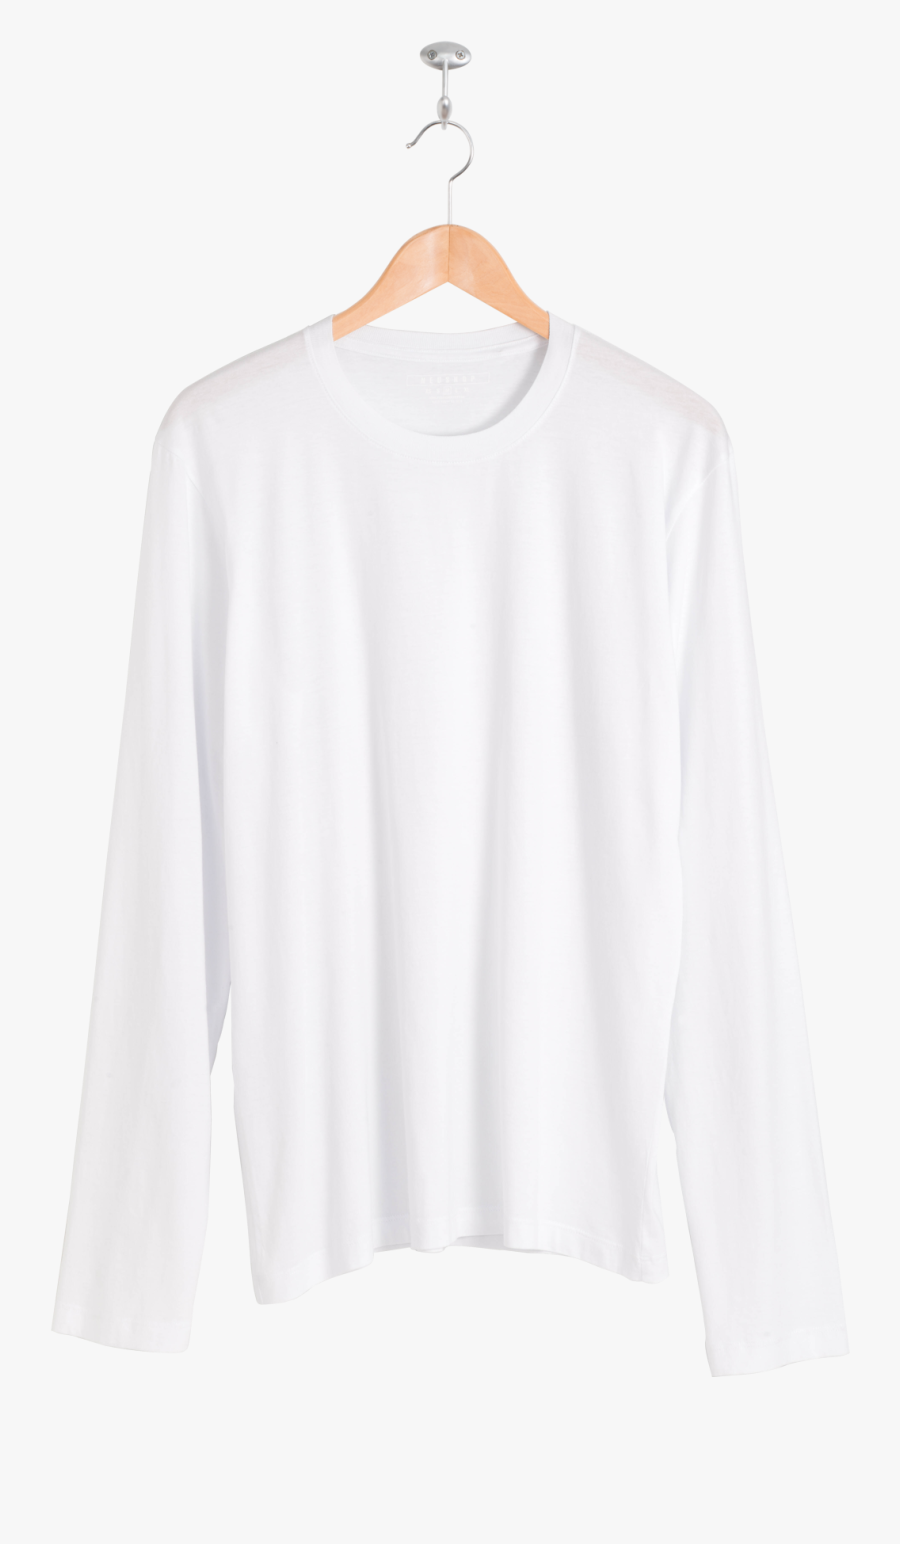 Long Sleeve Shirt Png - Long Sleeve Shirt White Png, Transparent Clipart